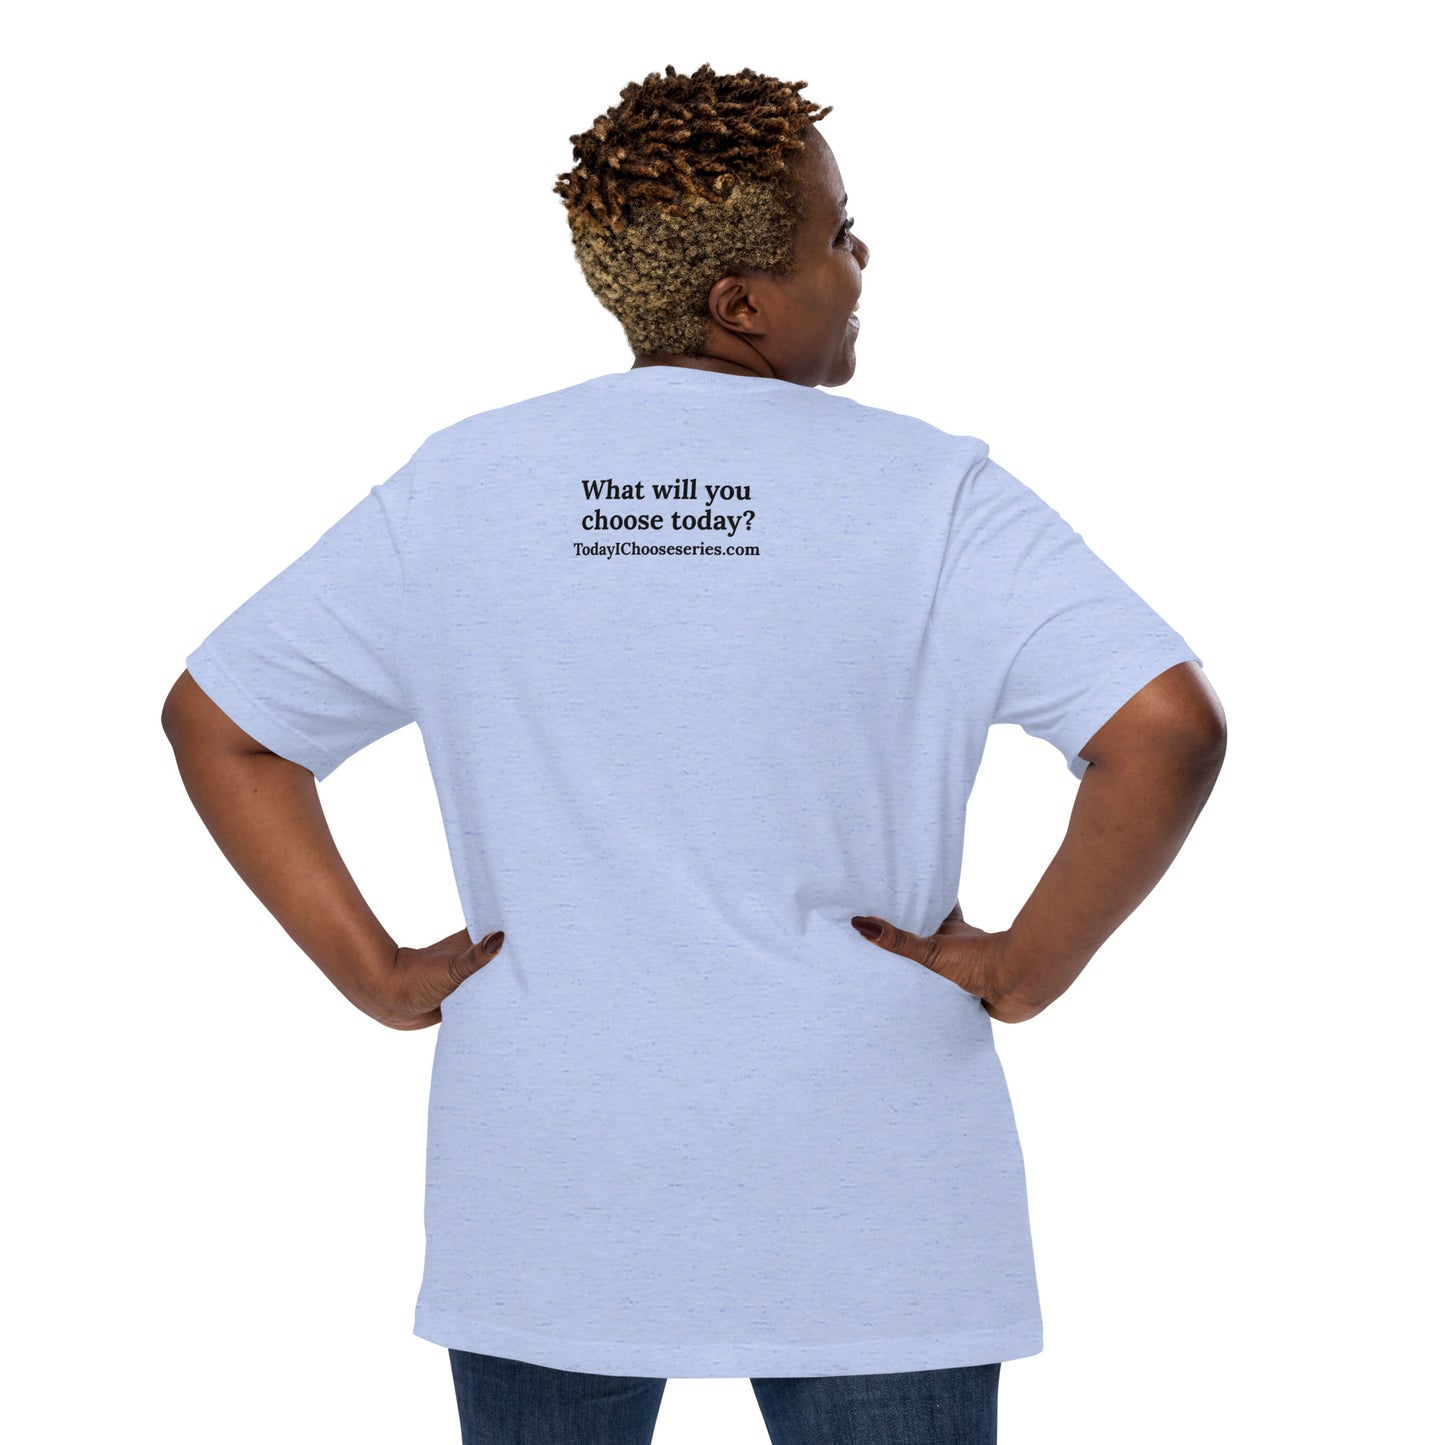 Choose Joy unisex t-shirt